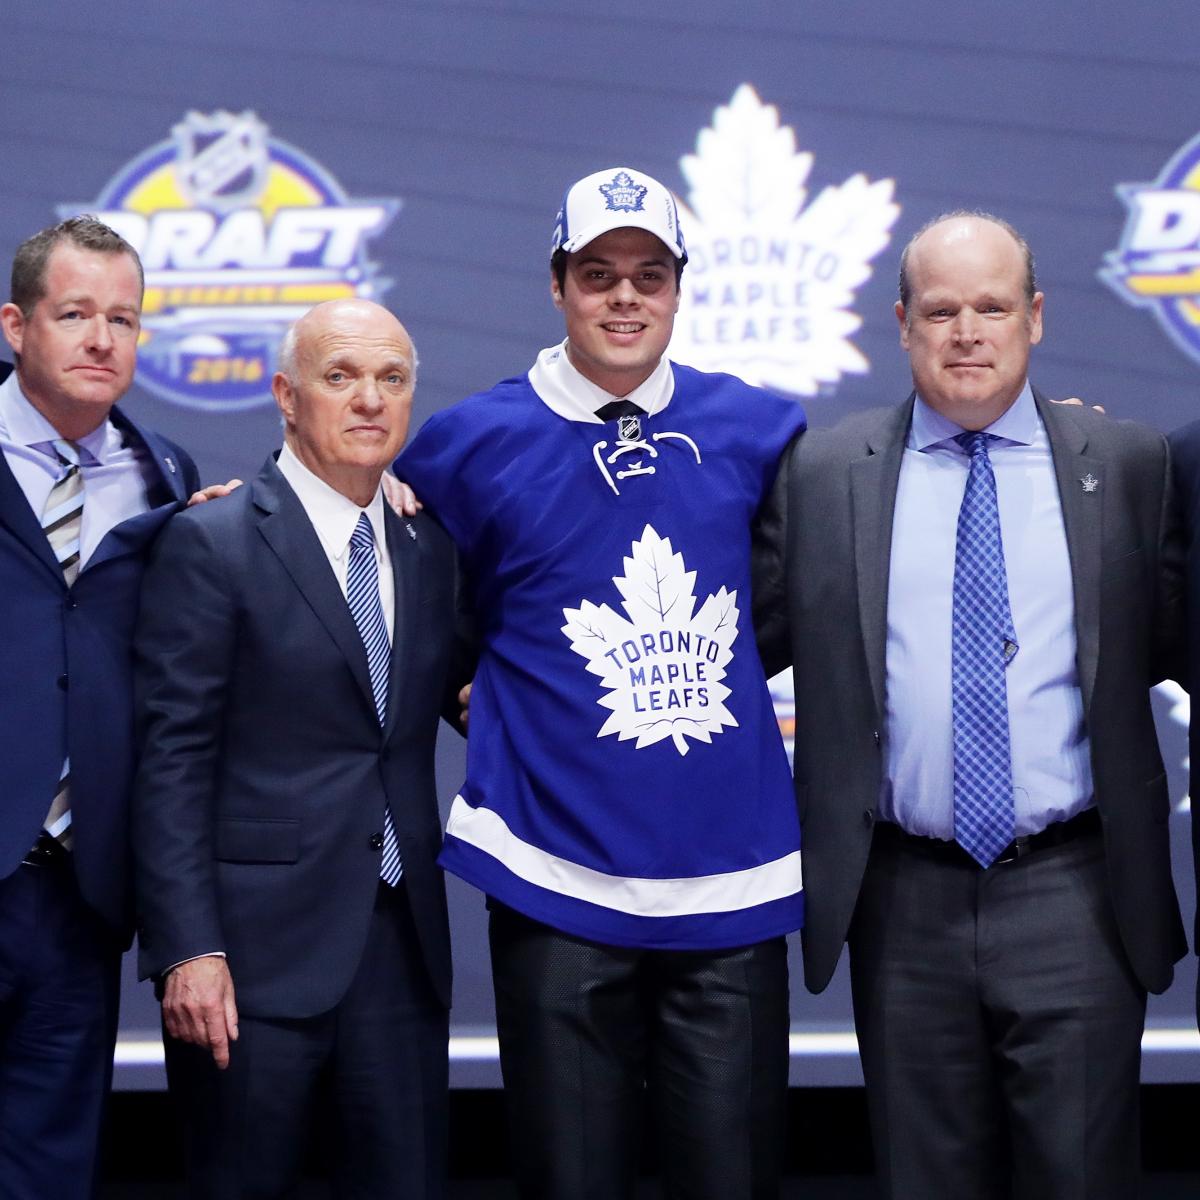 Toronto Maple Leafs on X: Welcome to Toronto, Matthew #NHLDraft